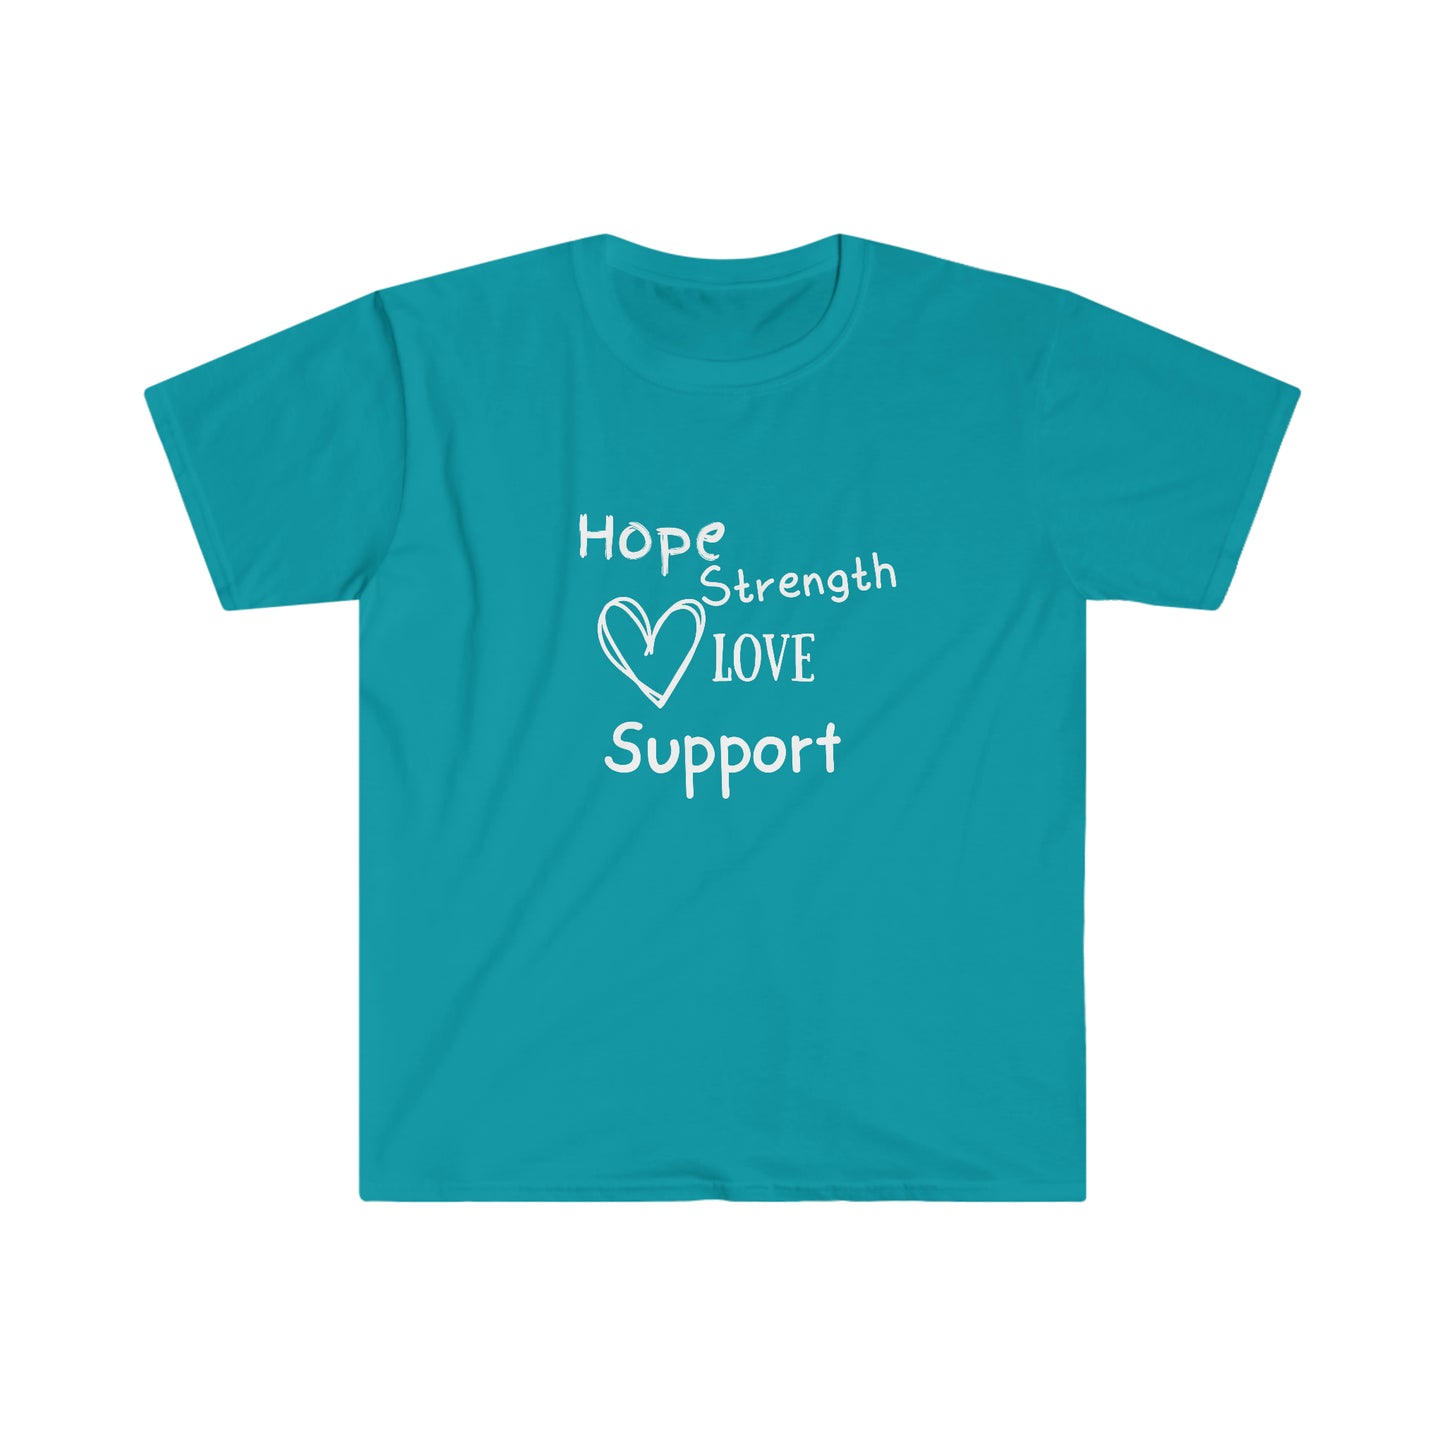 Feel-Good Reads Charity T-Shirt